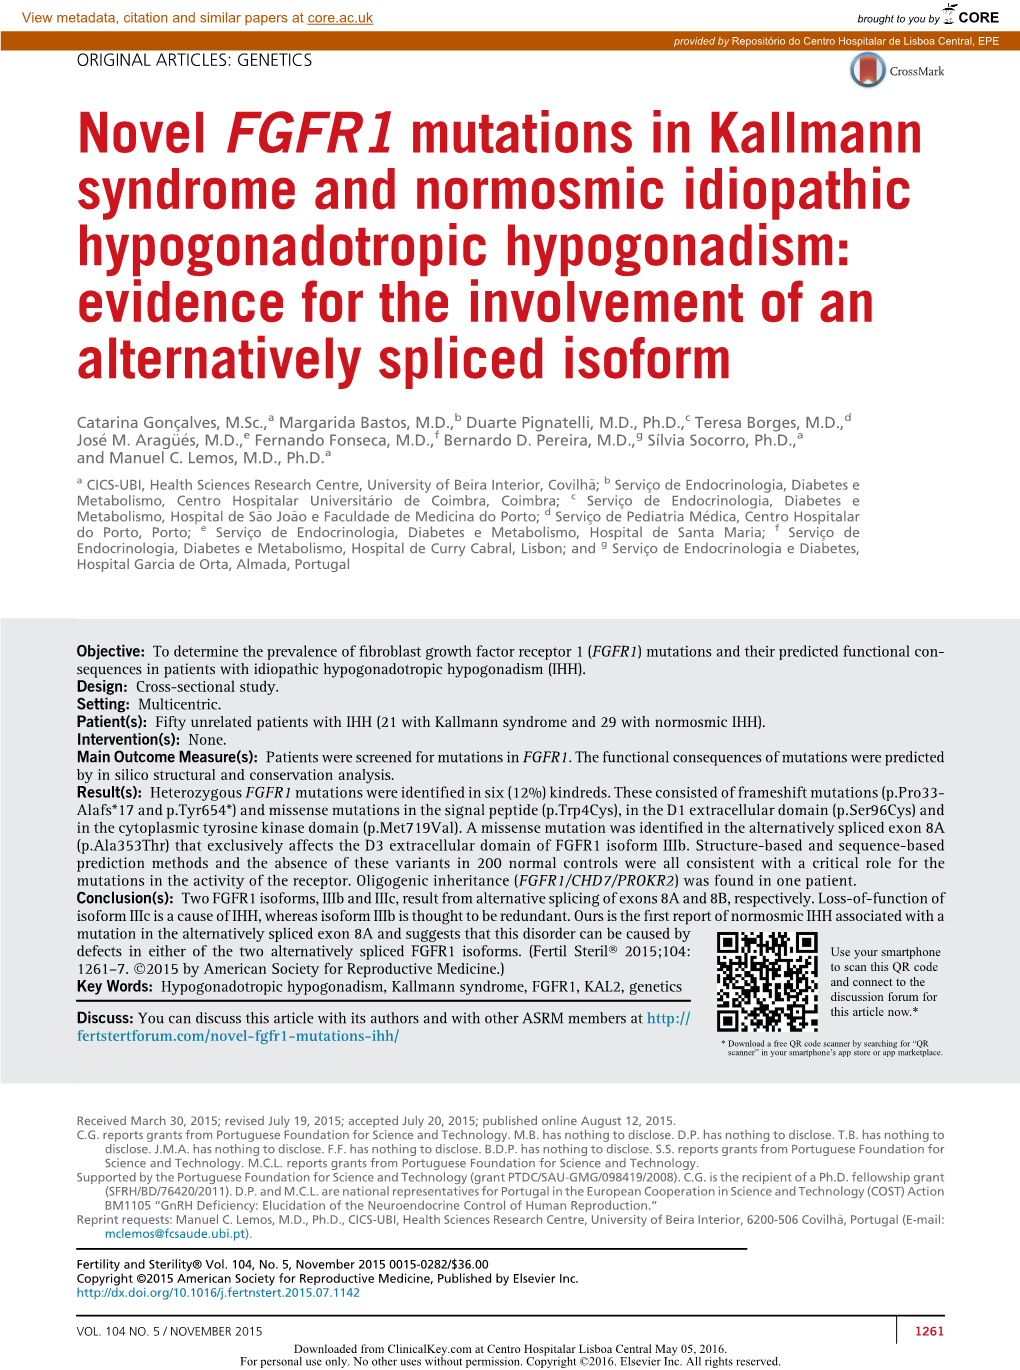 Novel FGFR1 Mutations in Kallmann Syndrome and Normosmic Idiopathic Hypogonadotropic Hypogonadism: Evidence for the Involvement of an Alternatively Spliced Isoform